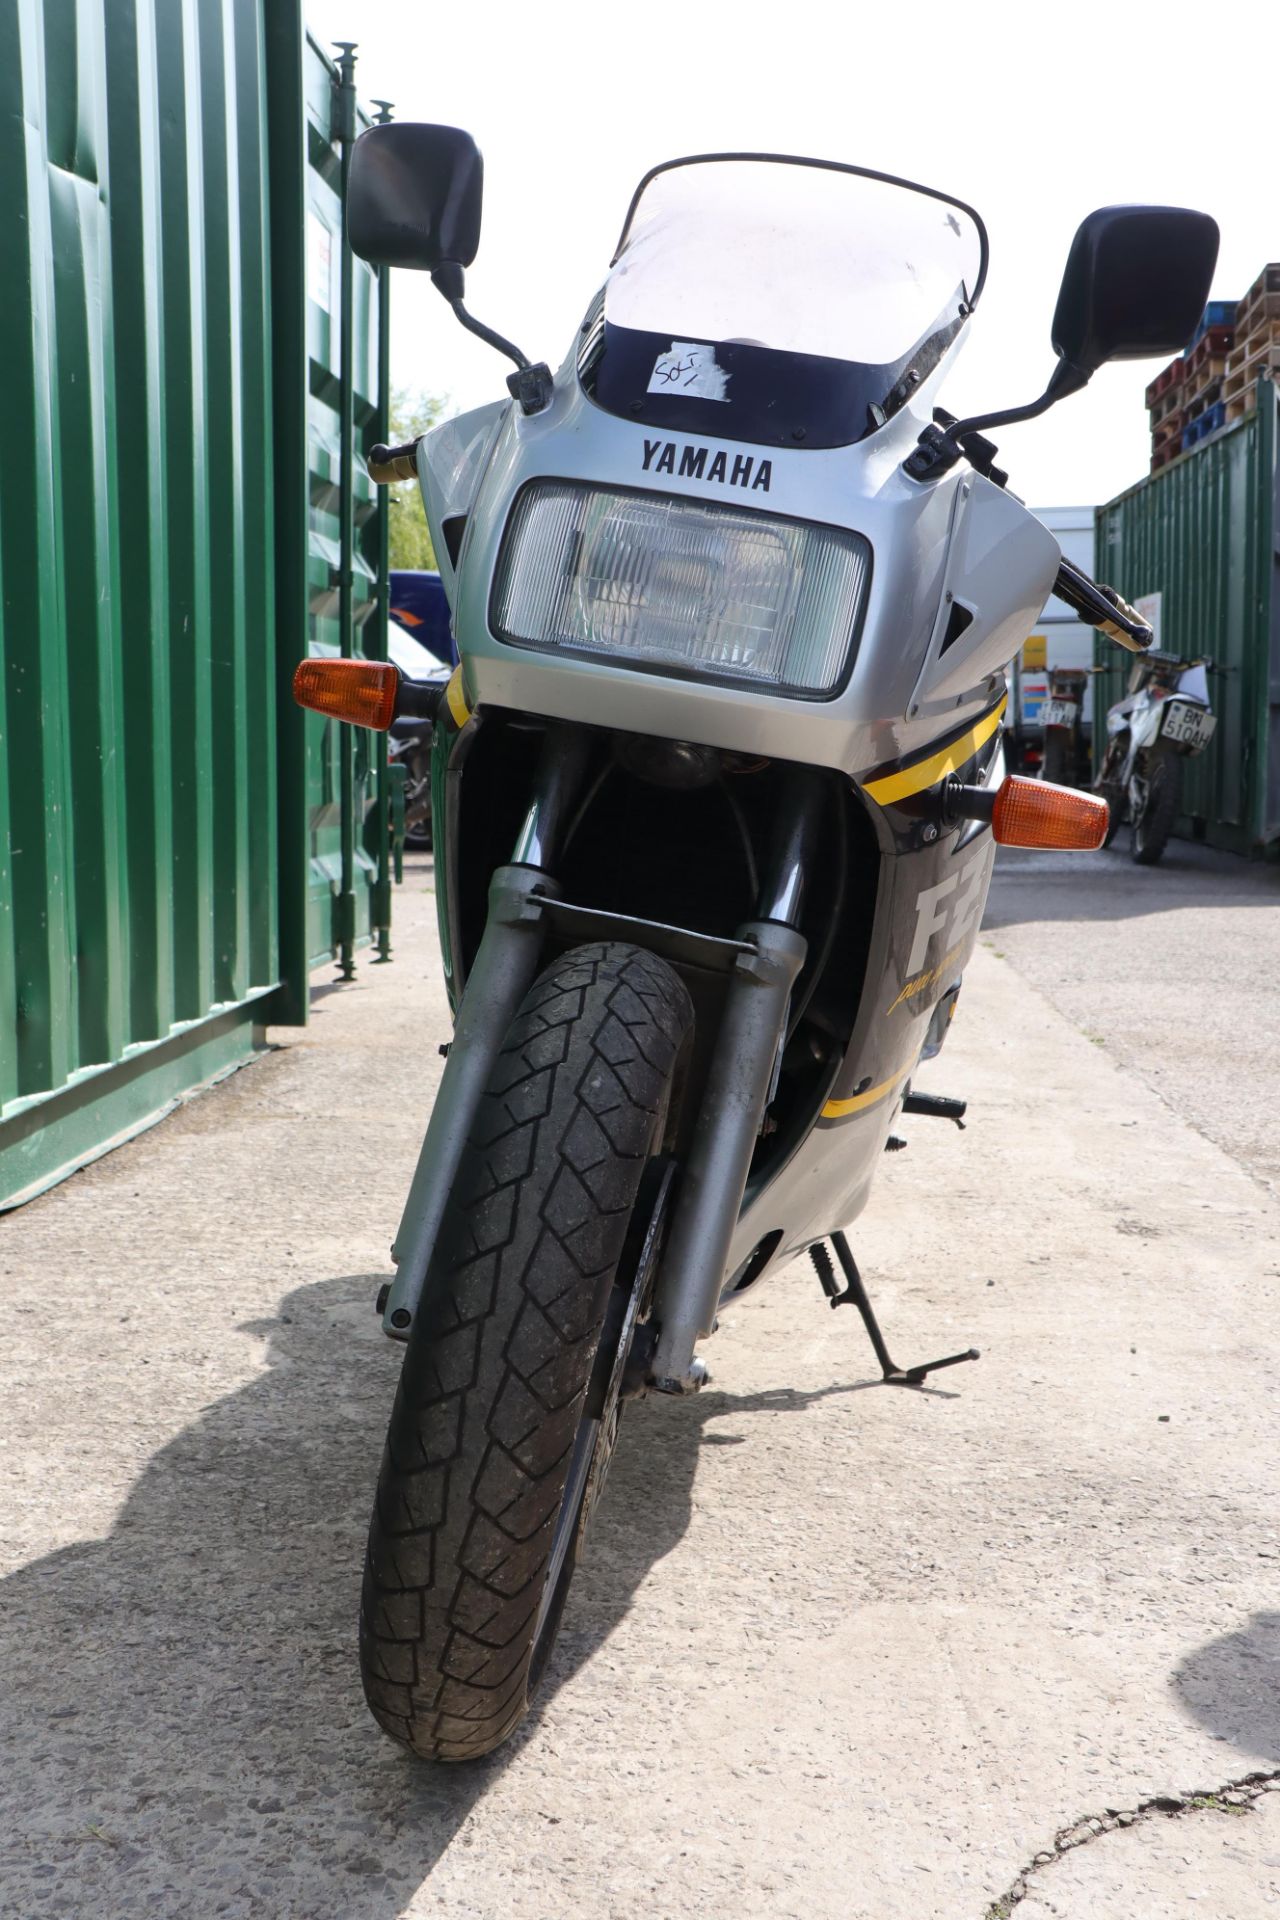 Yamaha FZ 750 Motorcycle - Image 2 of 3